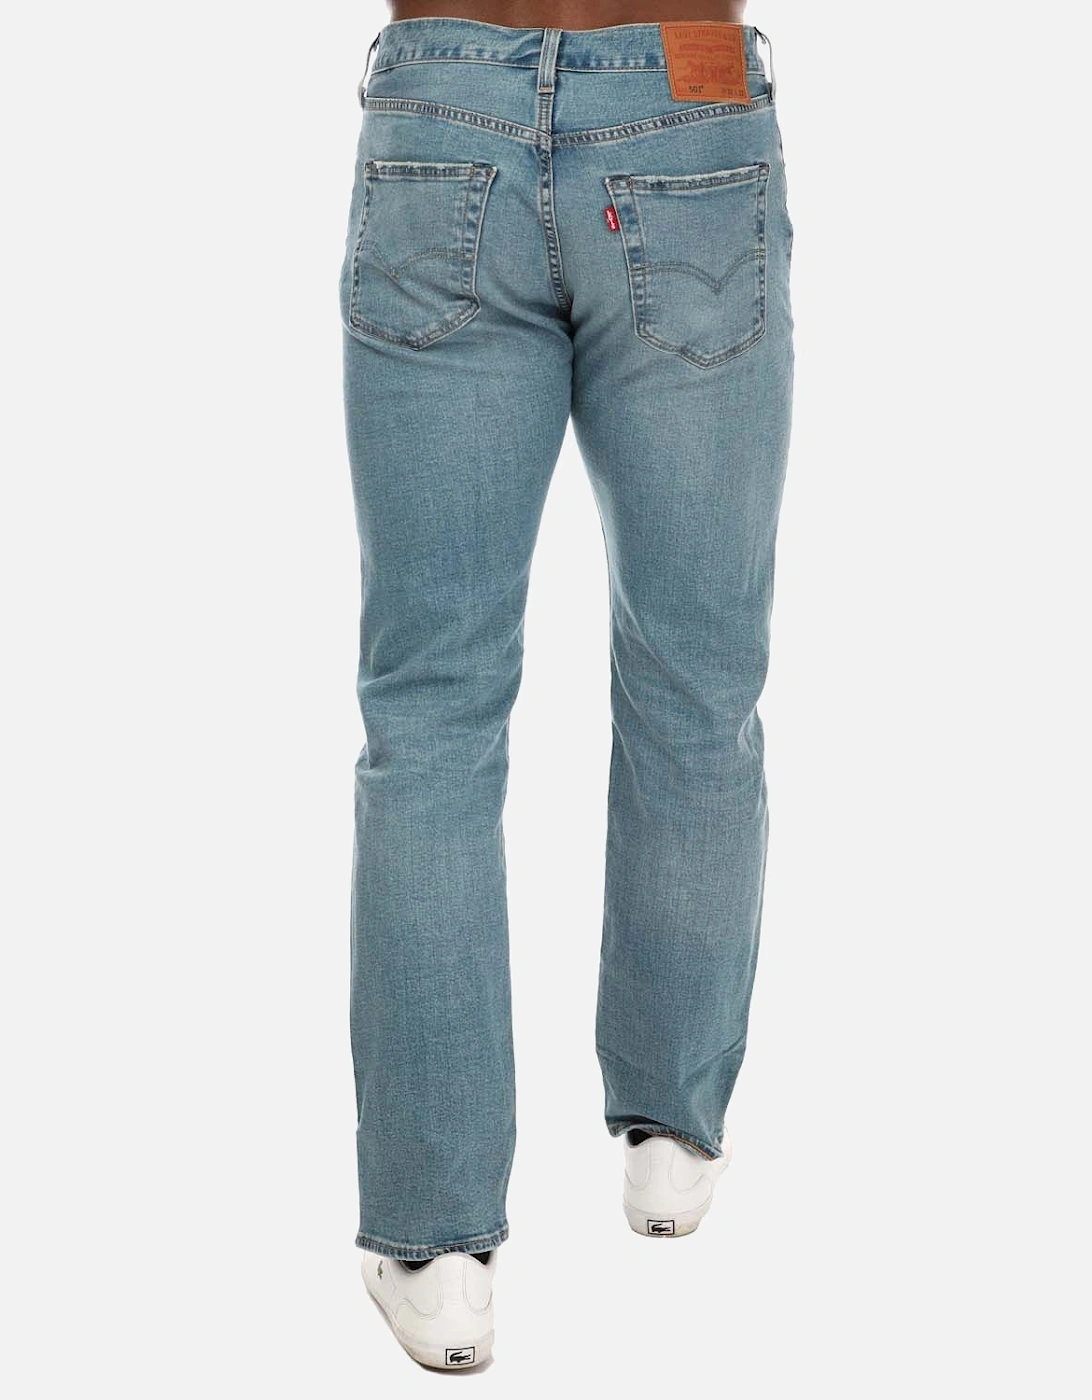 Mens 501 Original Ironwood Jeans